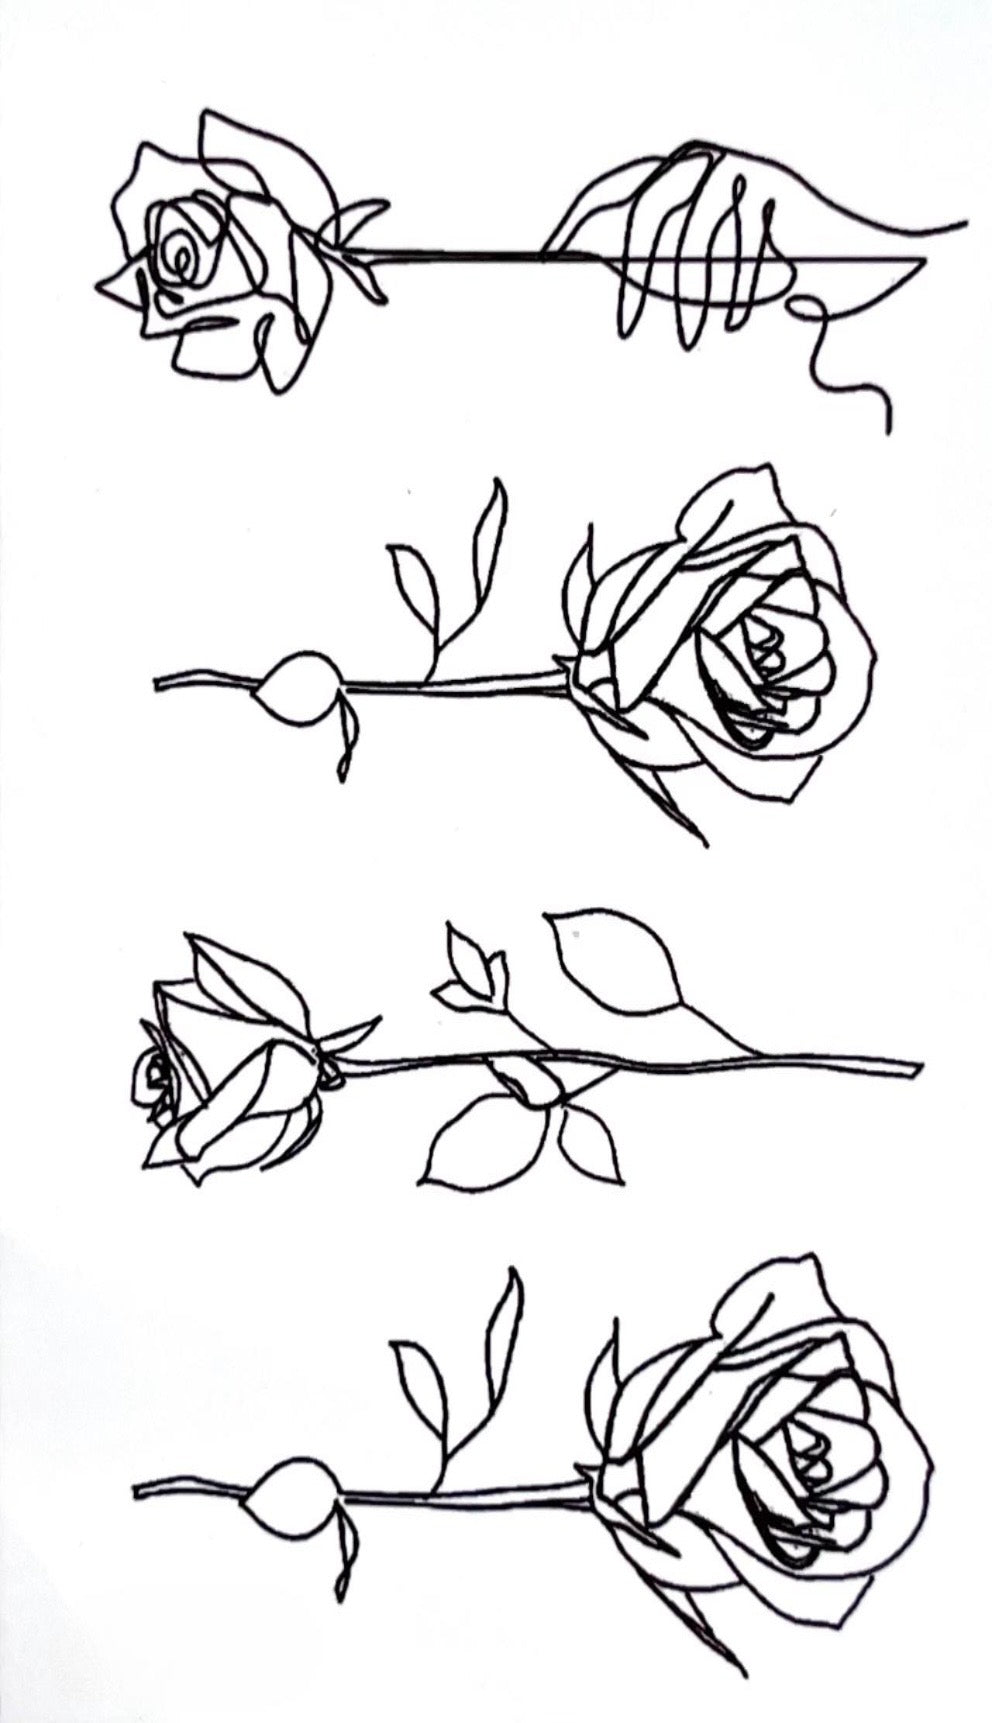 Temporary Body Tattoo - Flowers 02